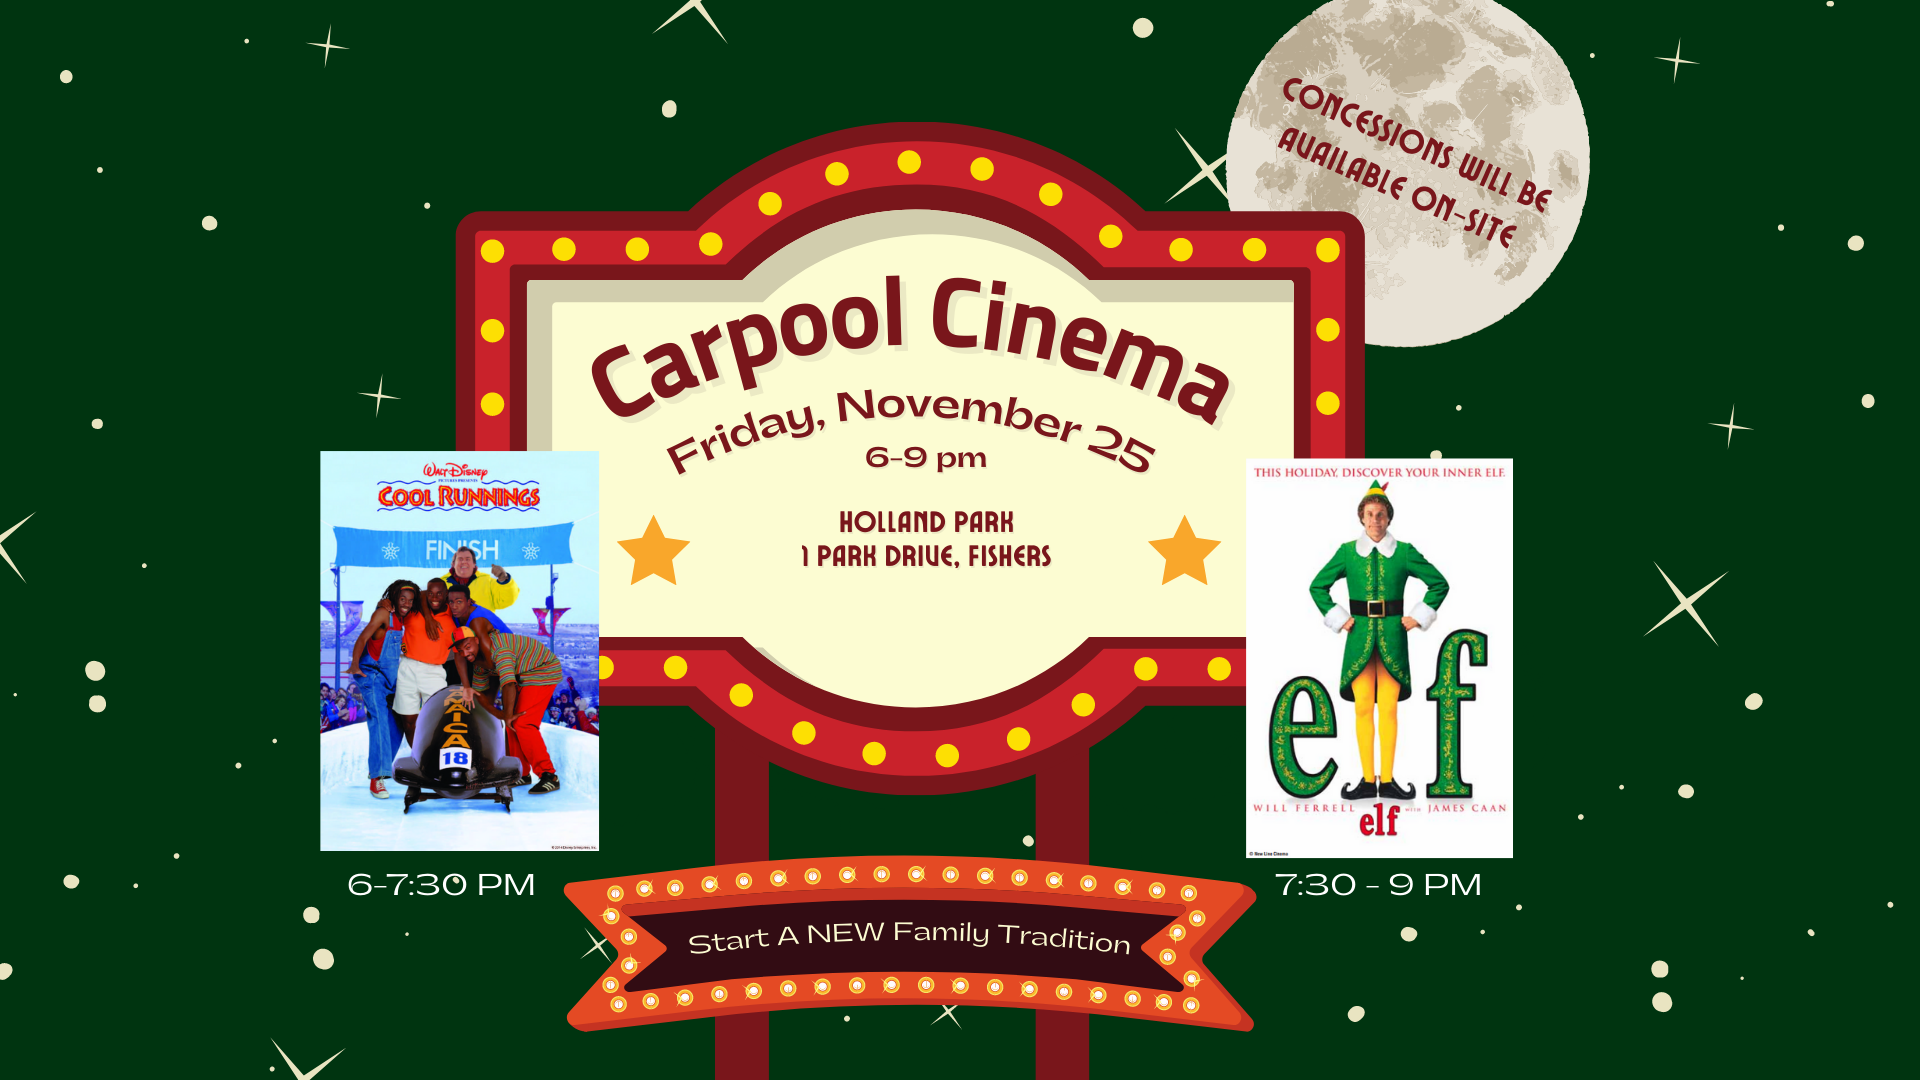 Carpool Cinema Friday, November 25 6-9pm Holland Park